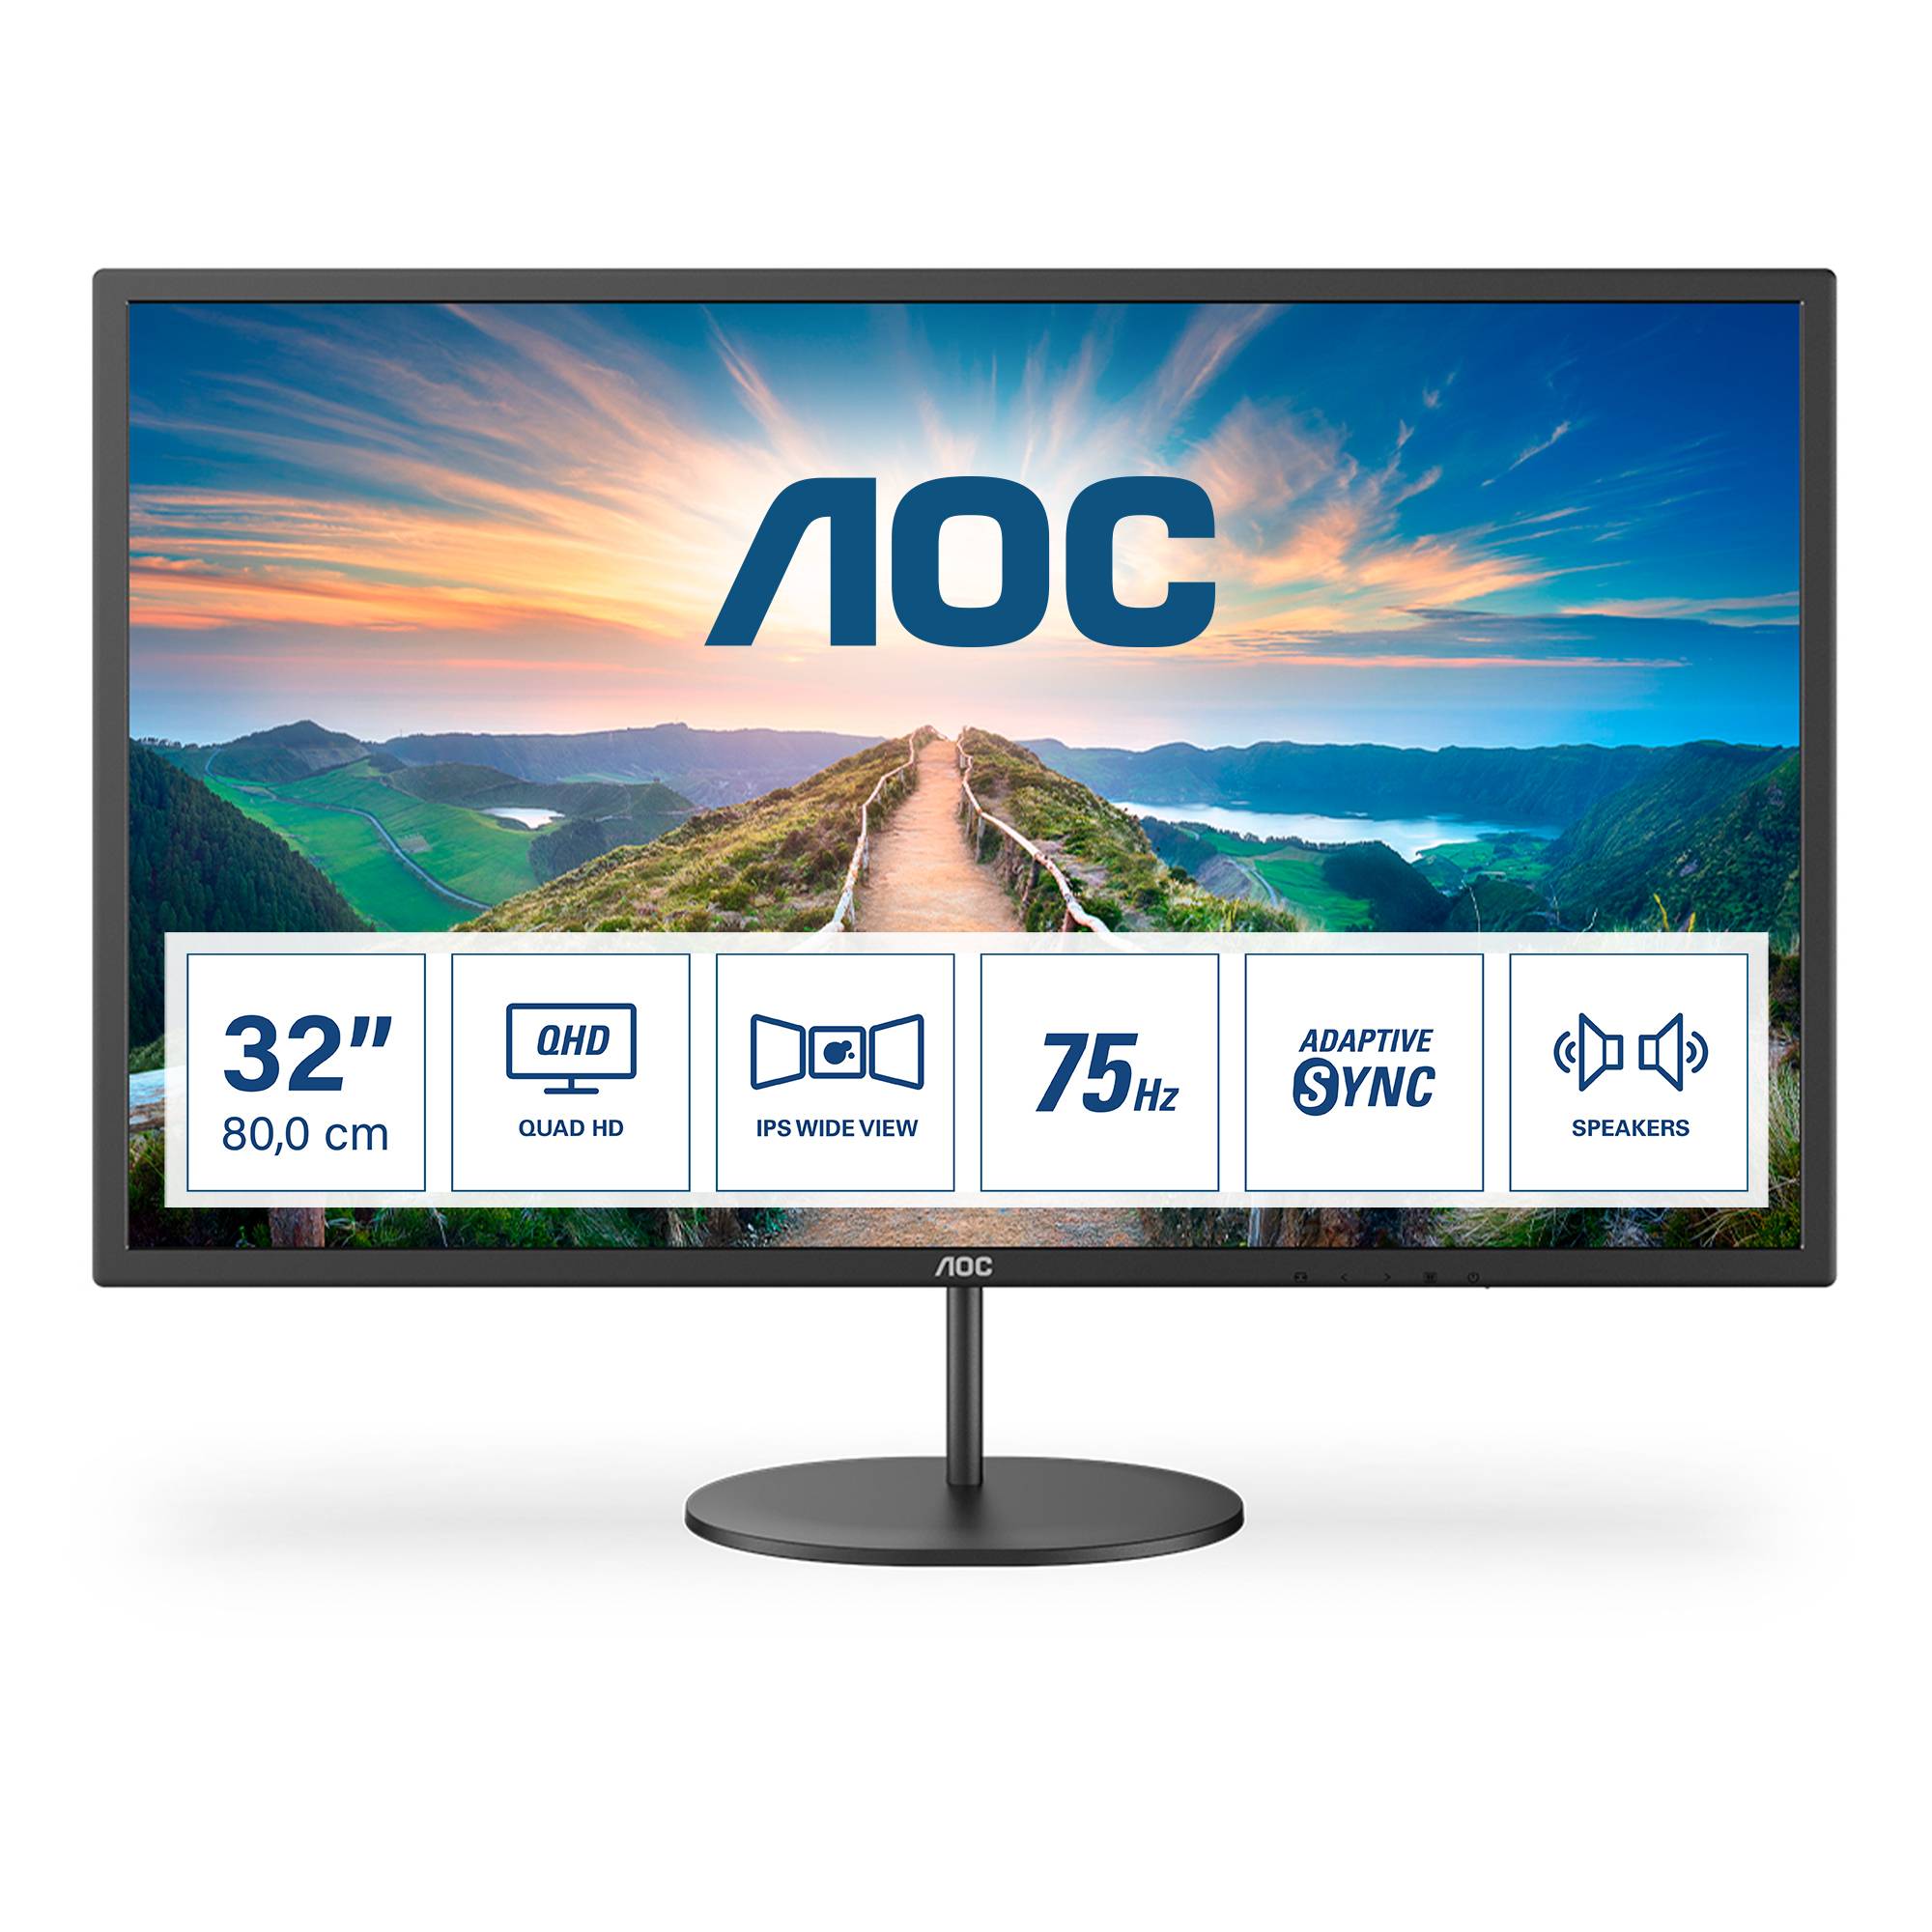 Rca Informatique - Image du produit : Q32V4 31.5IN IPS QHD 250CD/4MS/HDMI/DP